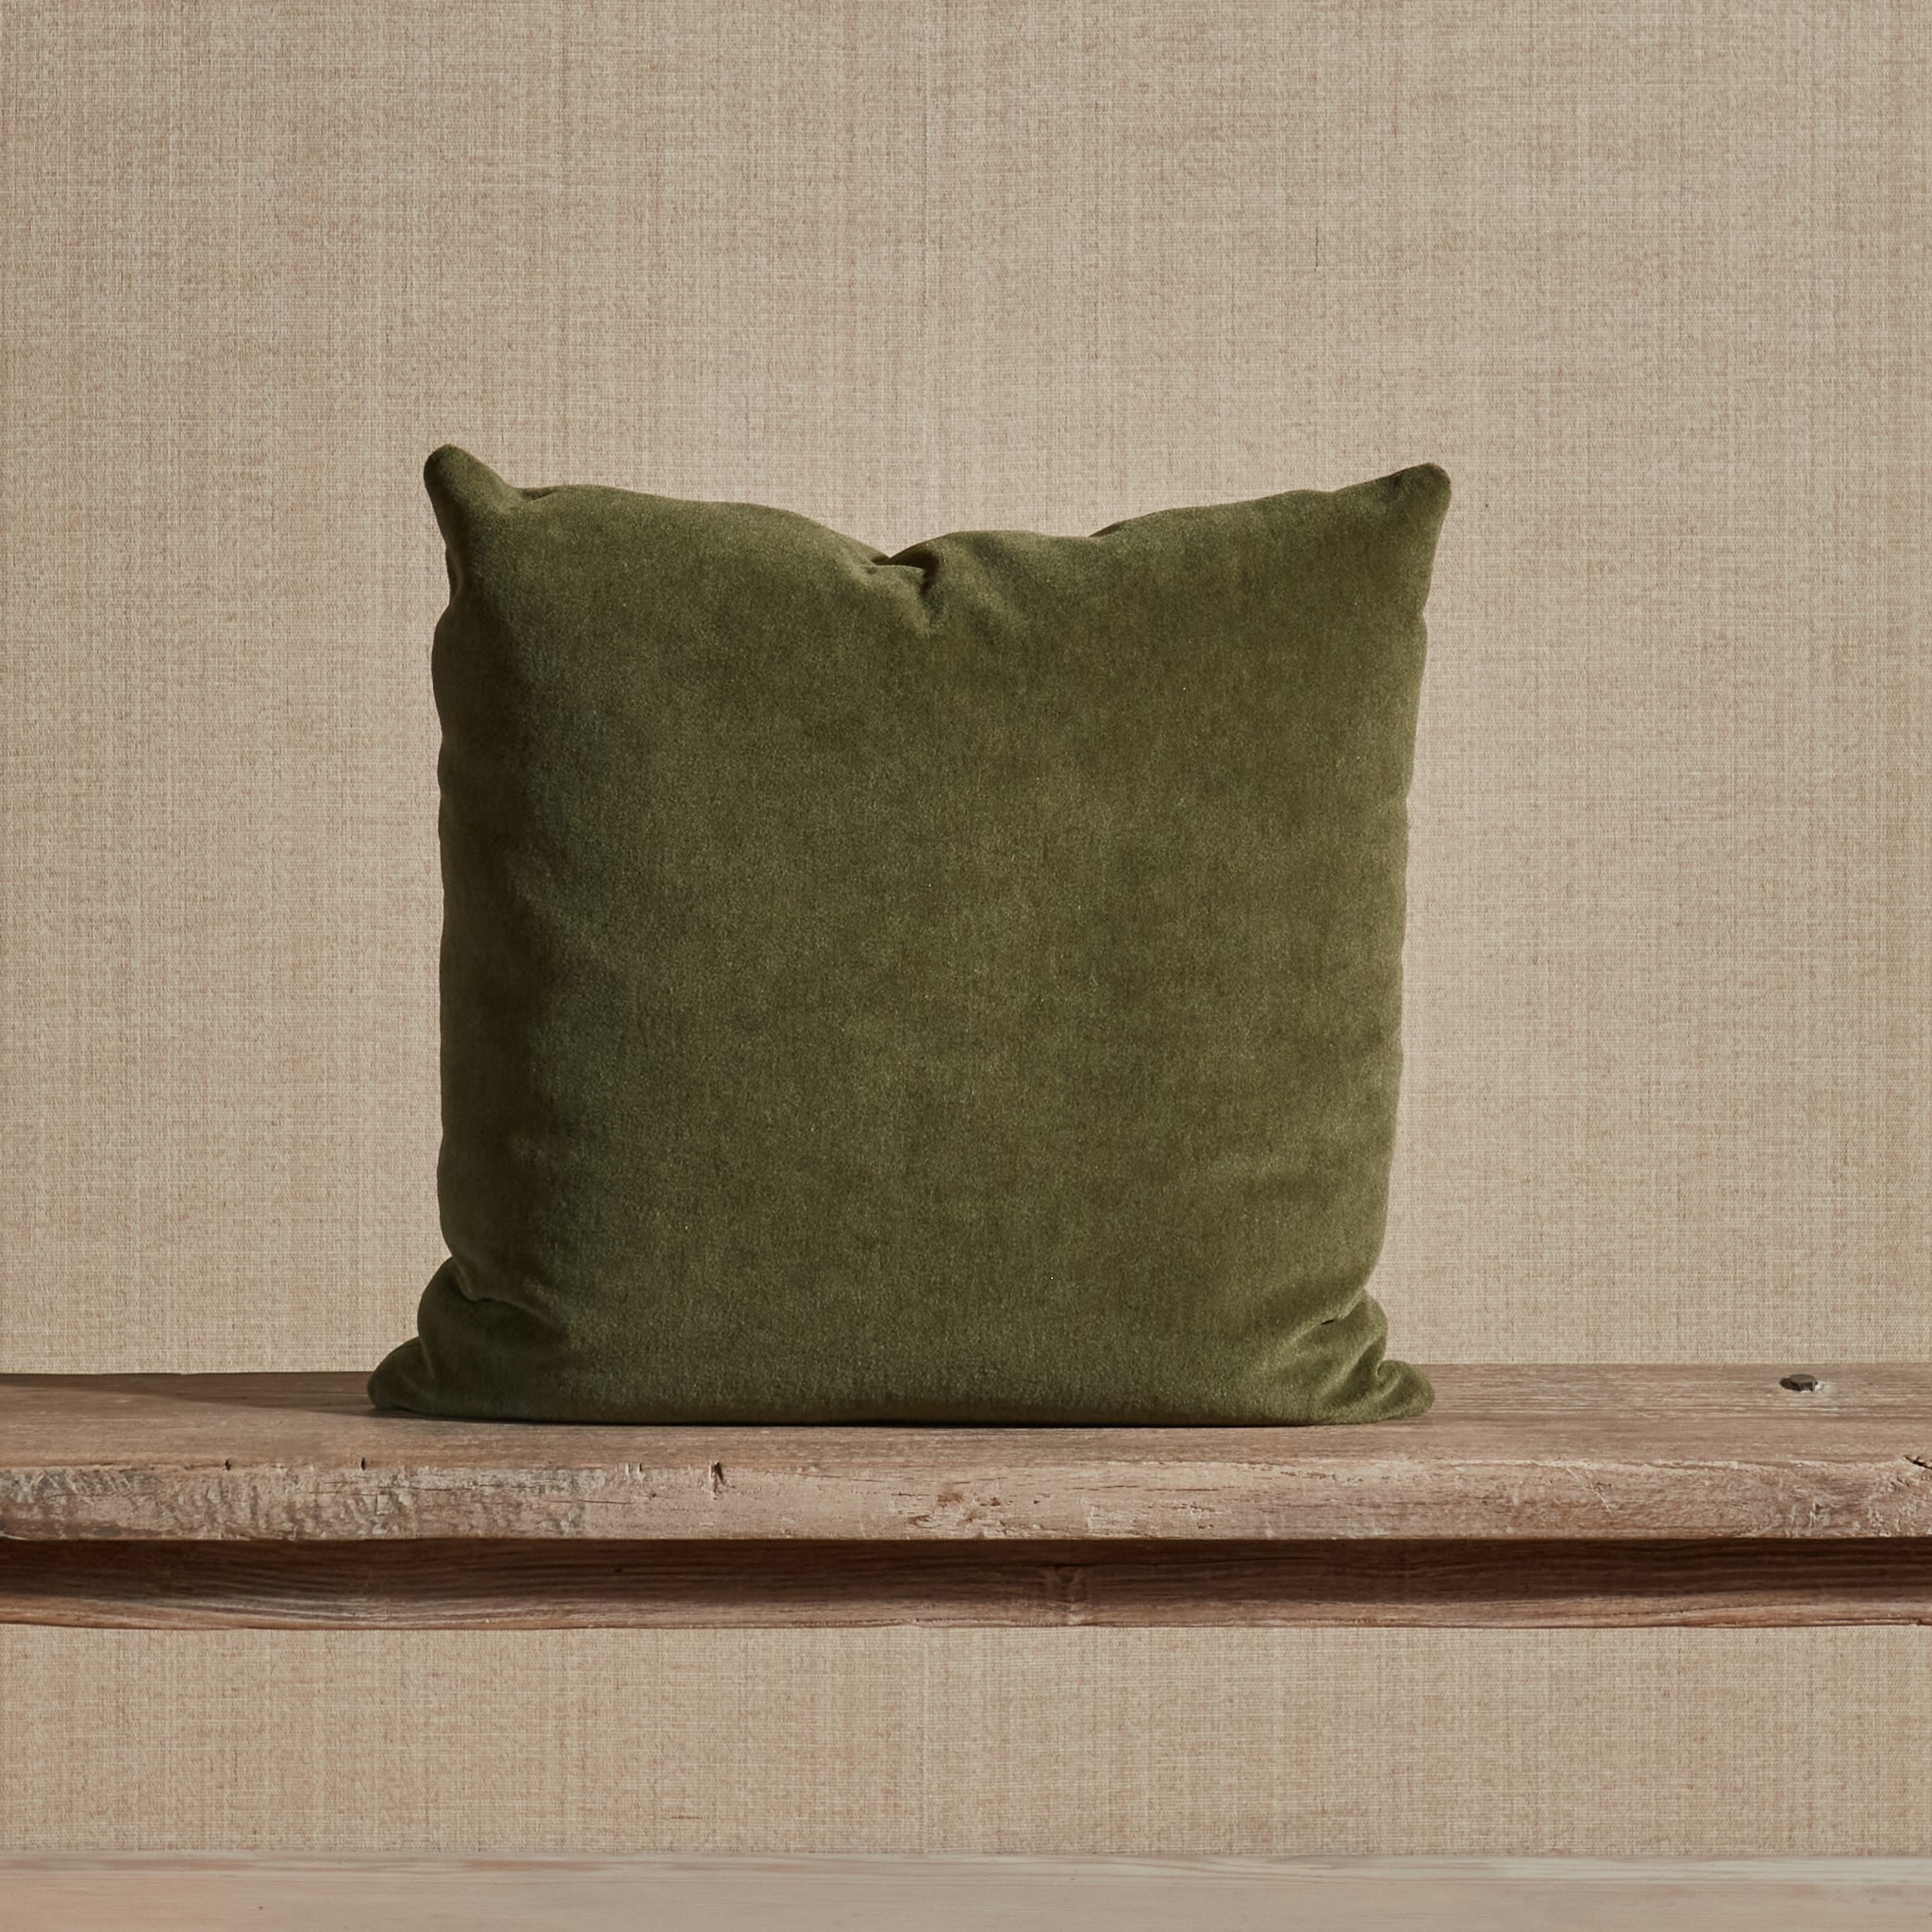 a green pillow sitting on top of a wooden shelf